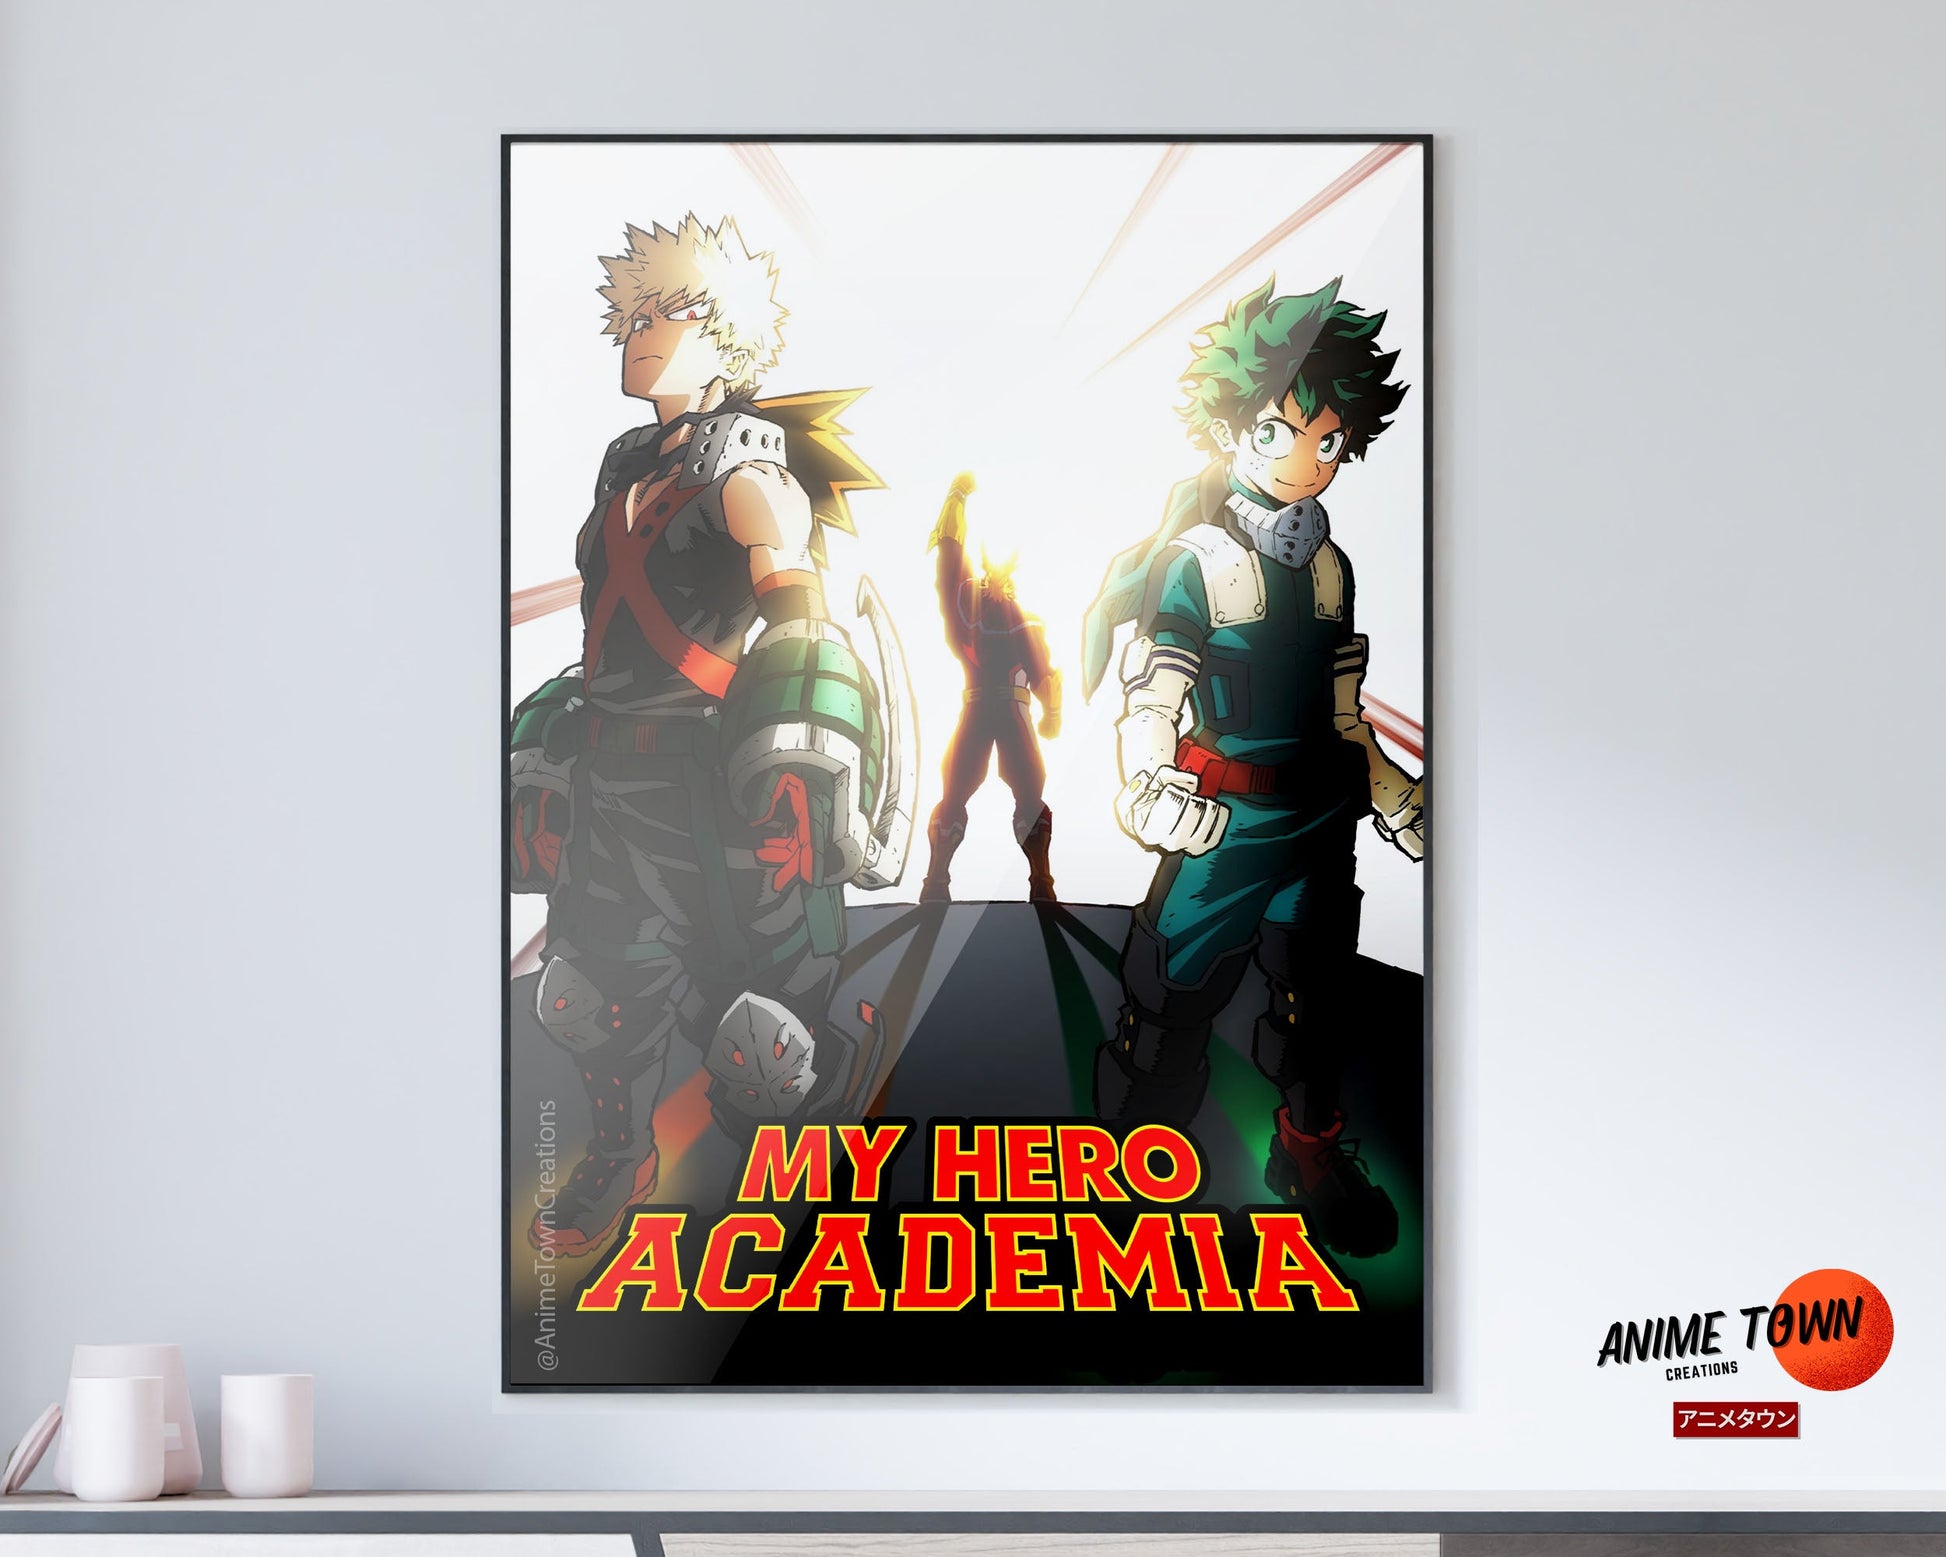 Anime Town Creations Poster My Hero Academia Bakugo, Deku vs All Might 5" x 7" Home Goods - Anime My Hero Academia Poster